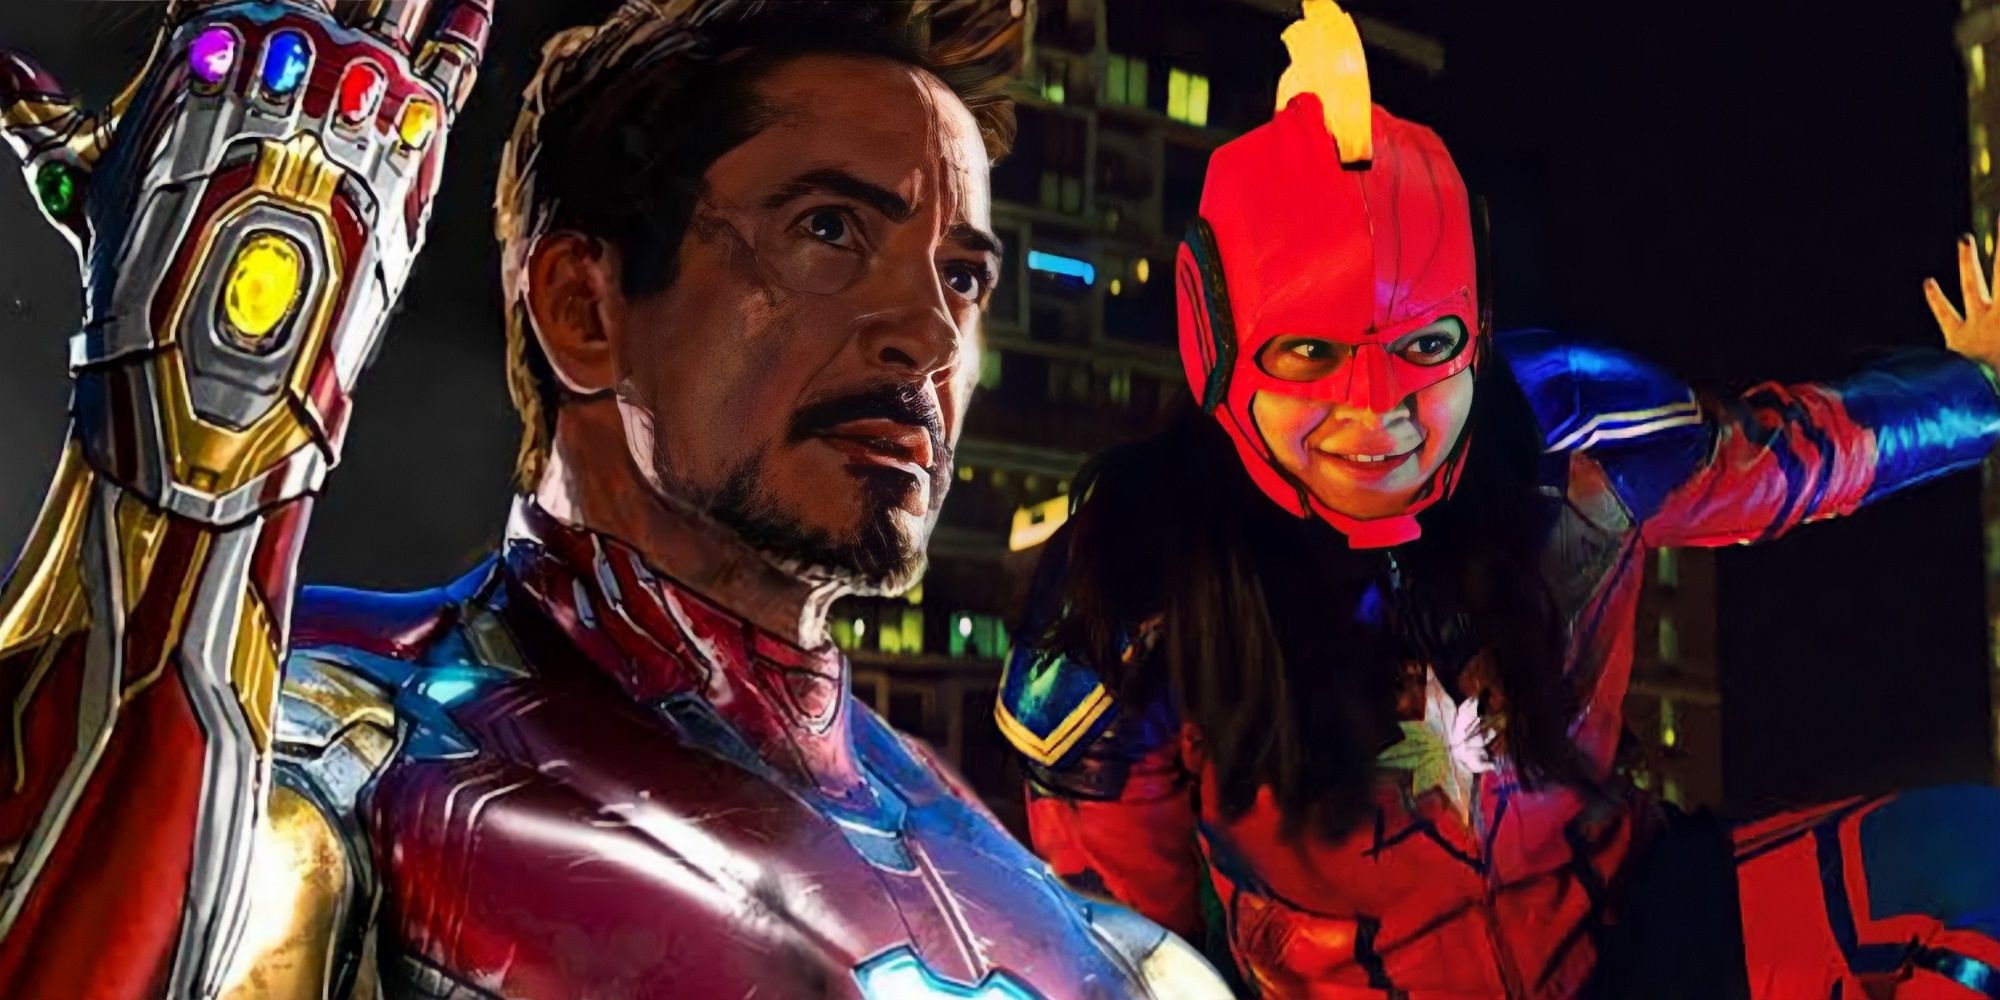 Ms. Marvel continúa accidentalmente el legado oculto de Iron Man